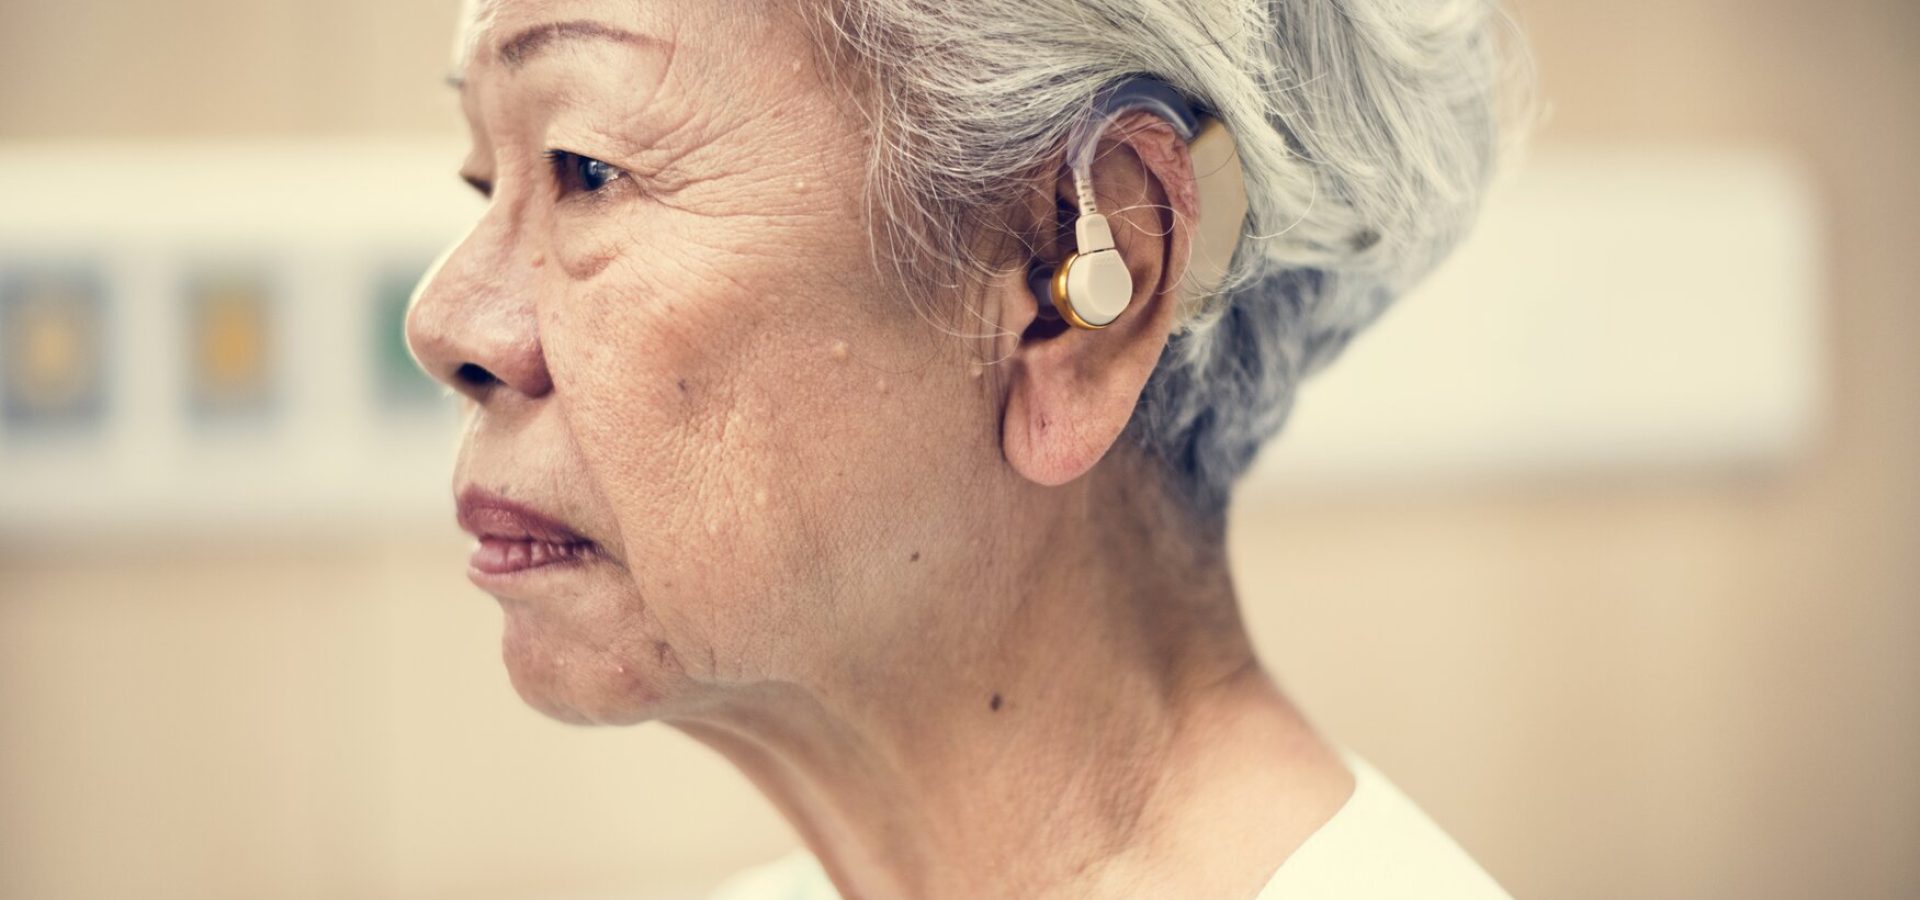 woman wearing hearing aid